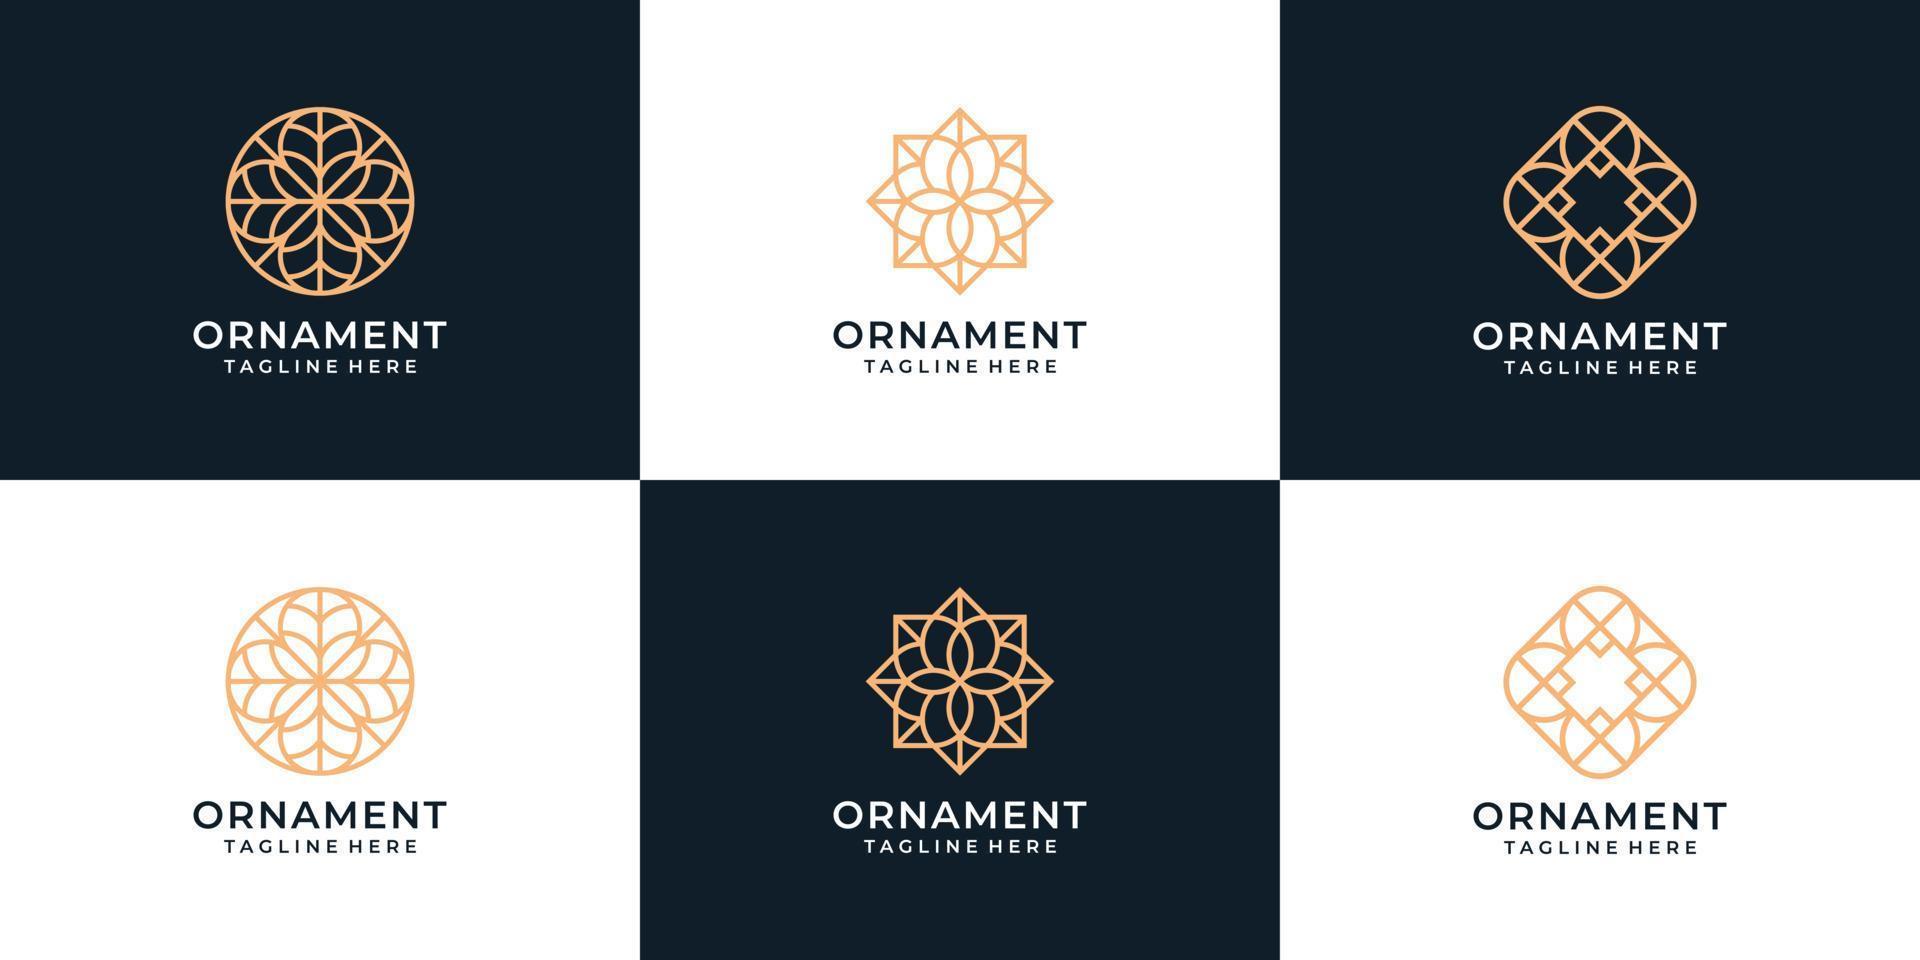 conjunto de concepto de vector de diseño de logotipo de ornamento moderno para decoración